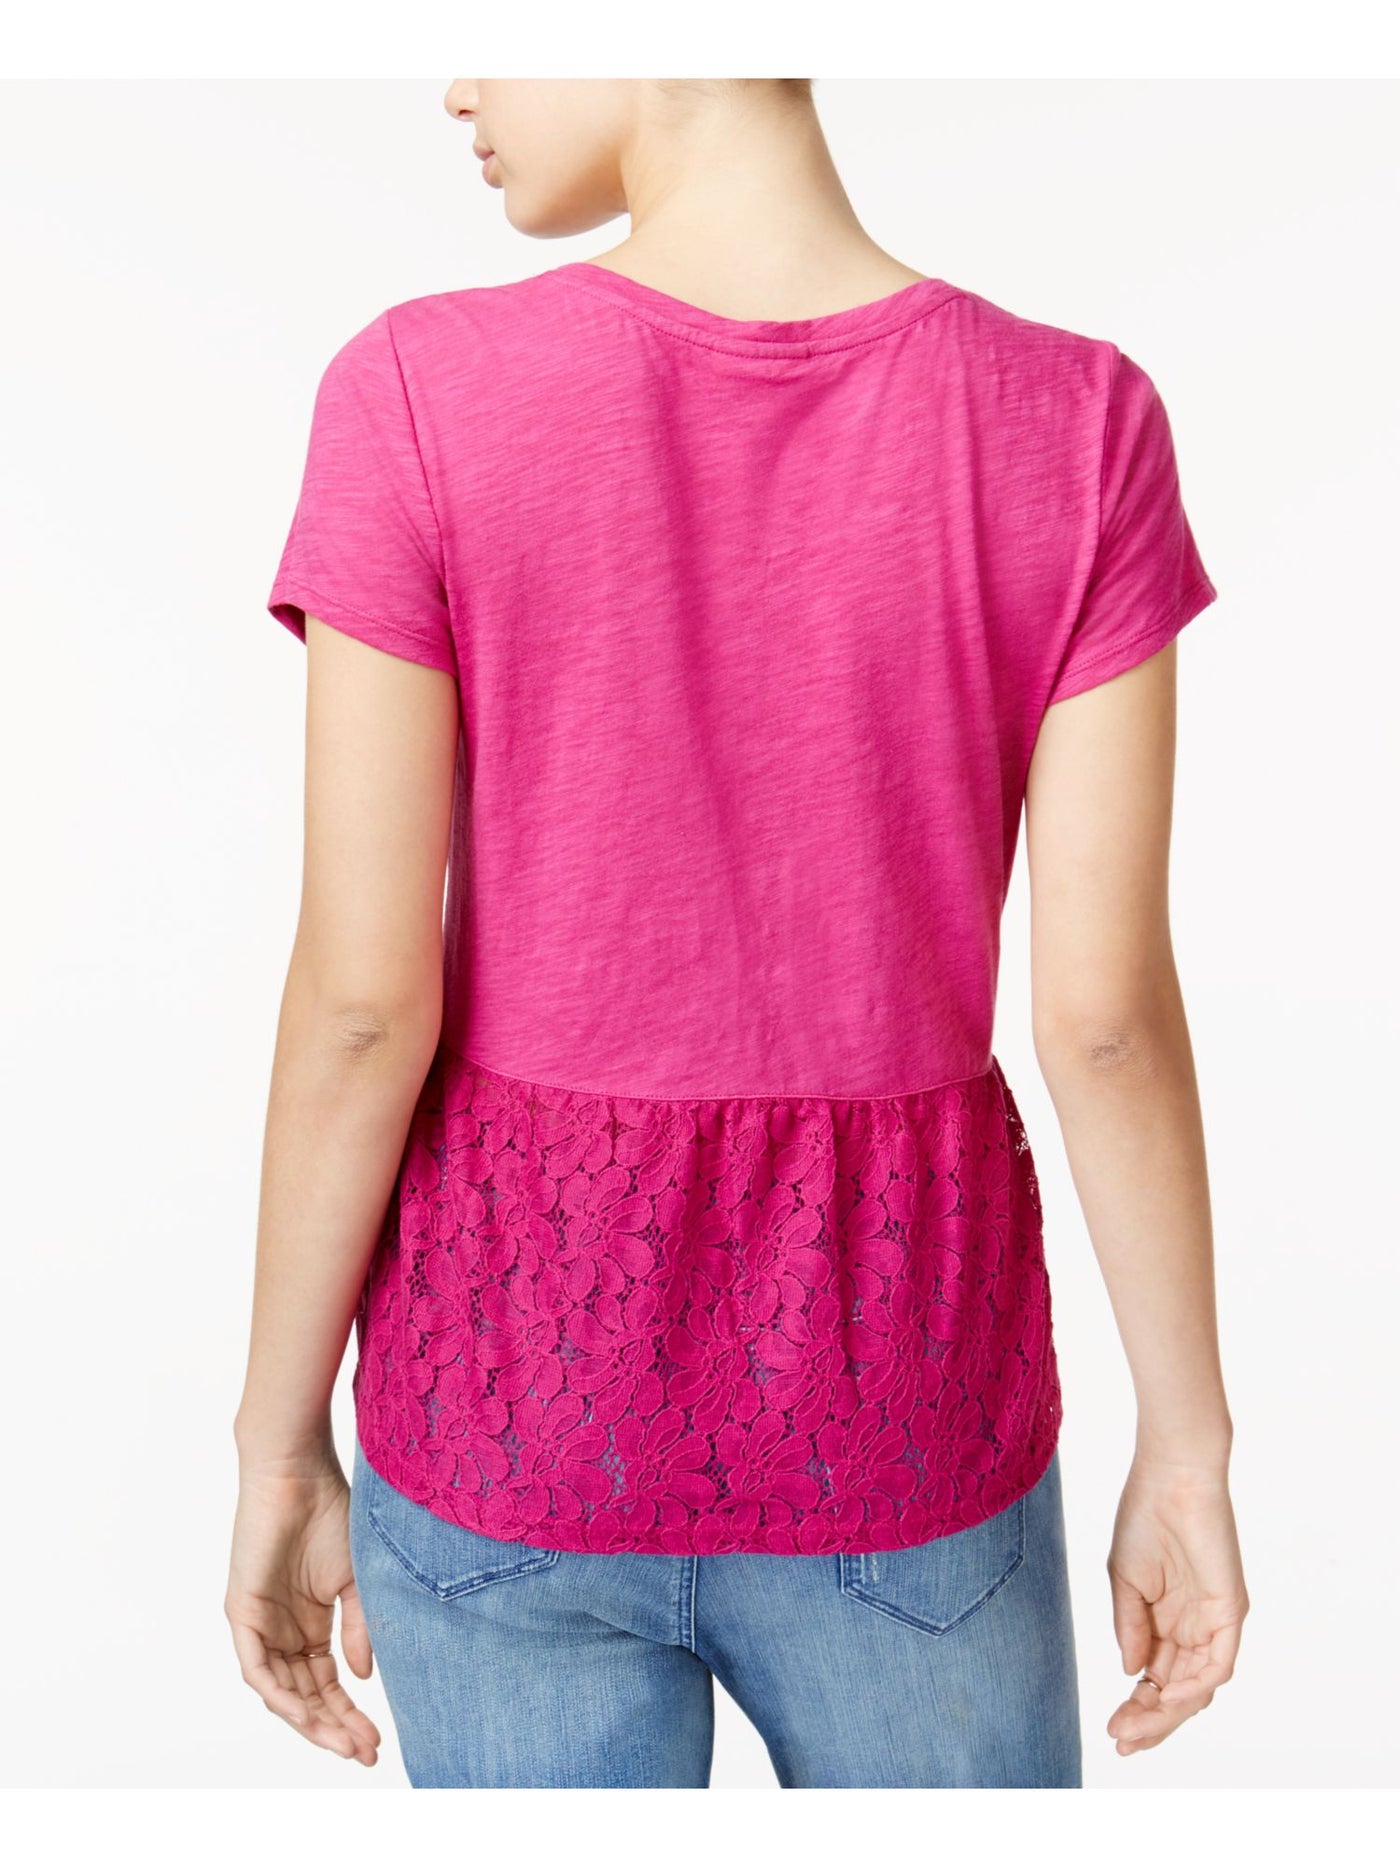 MAISON JULES Womens Pink Lace Short Sleeve Jewel Neck Top Size: XS